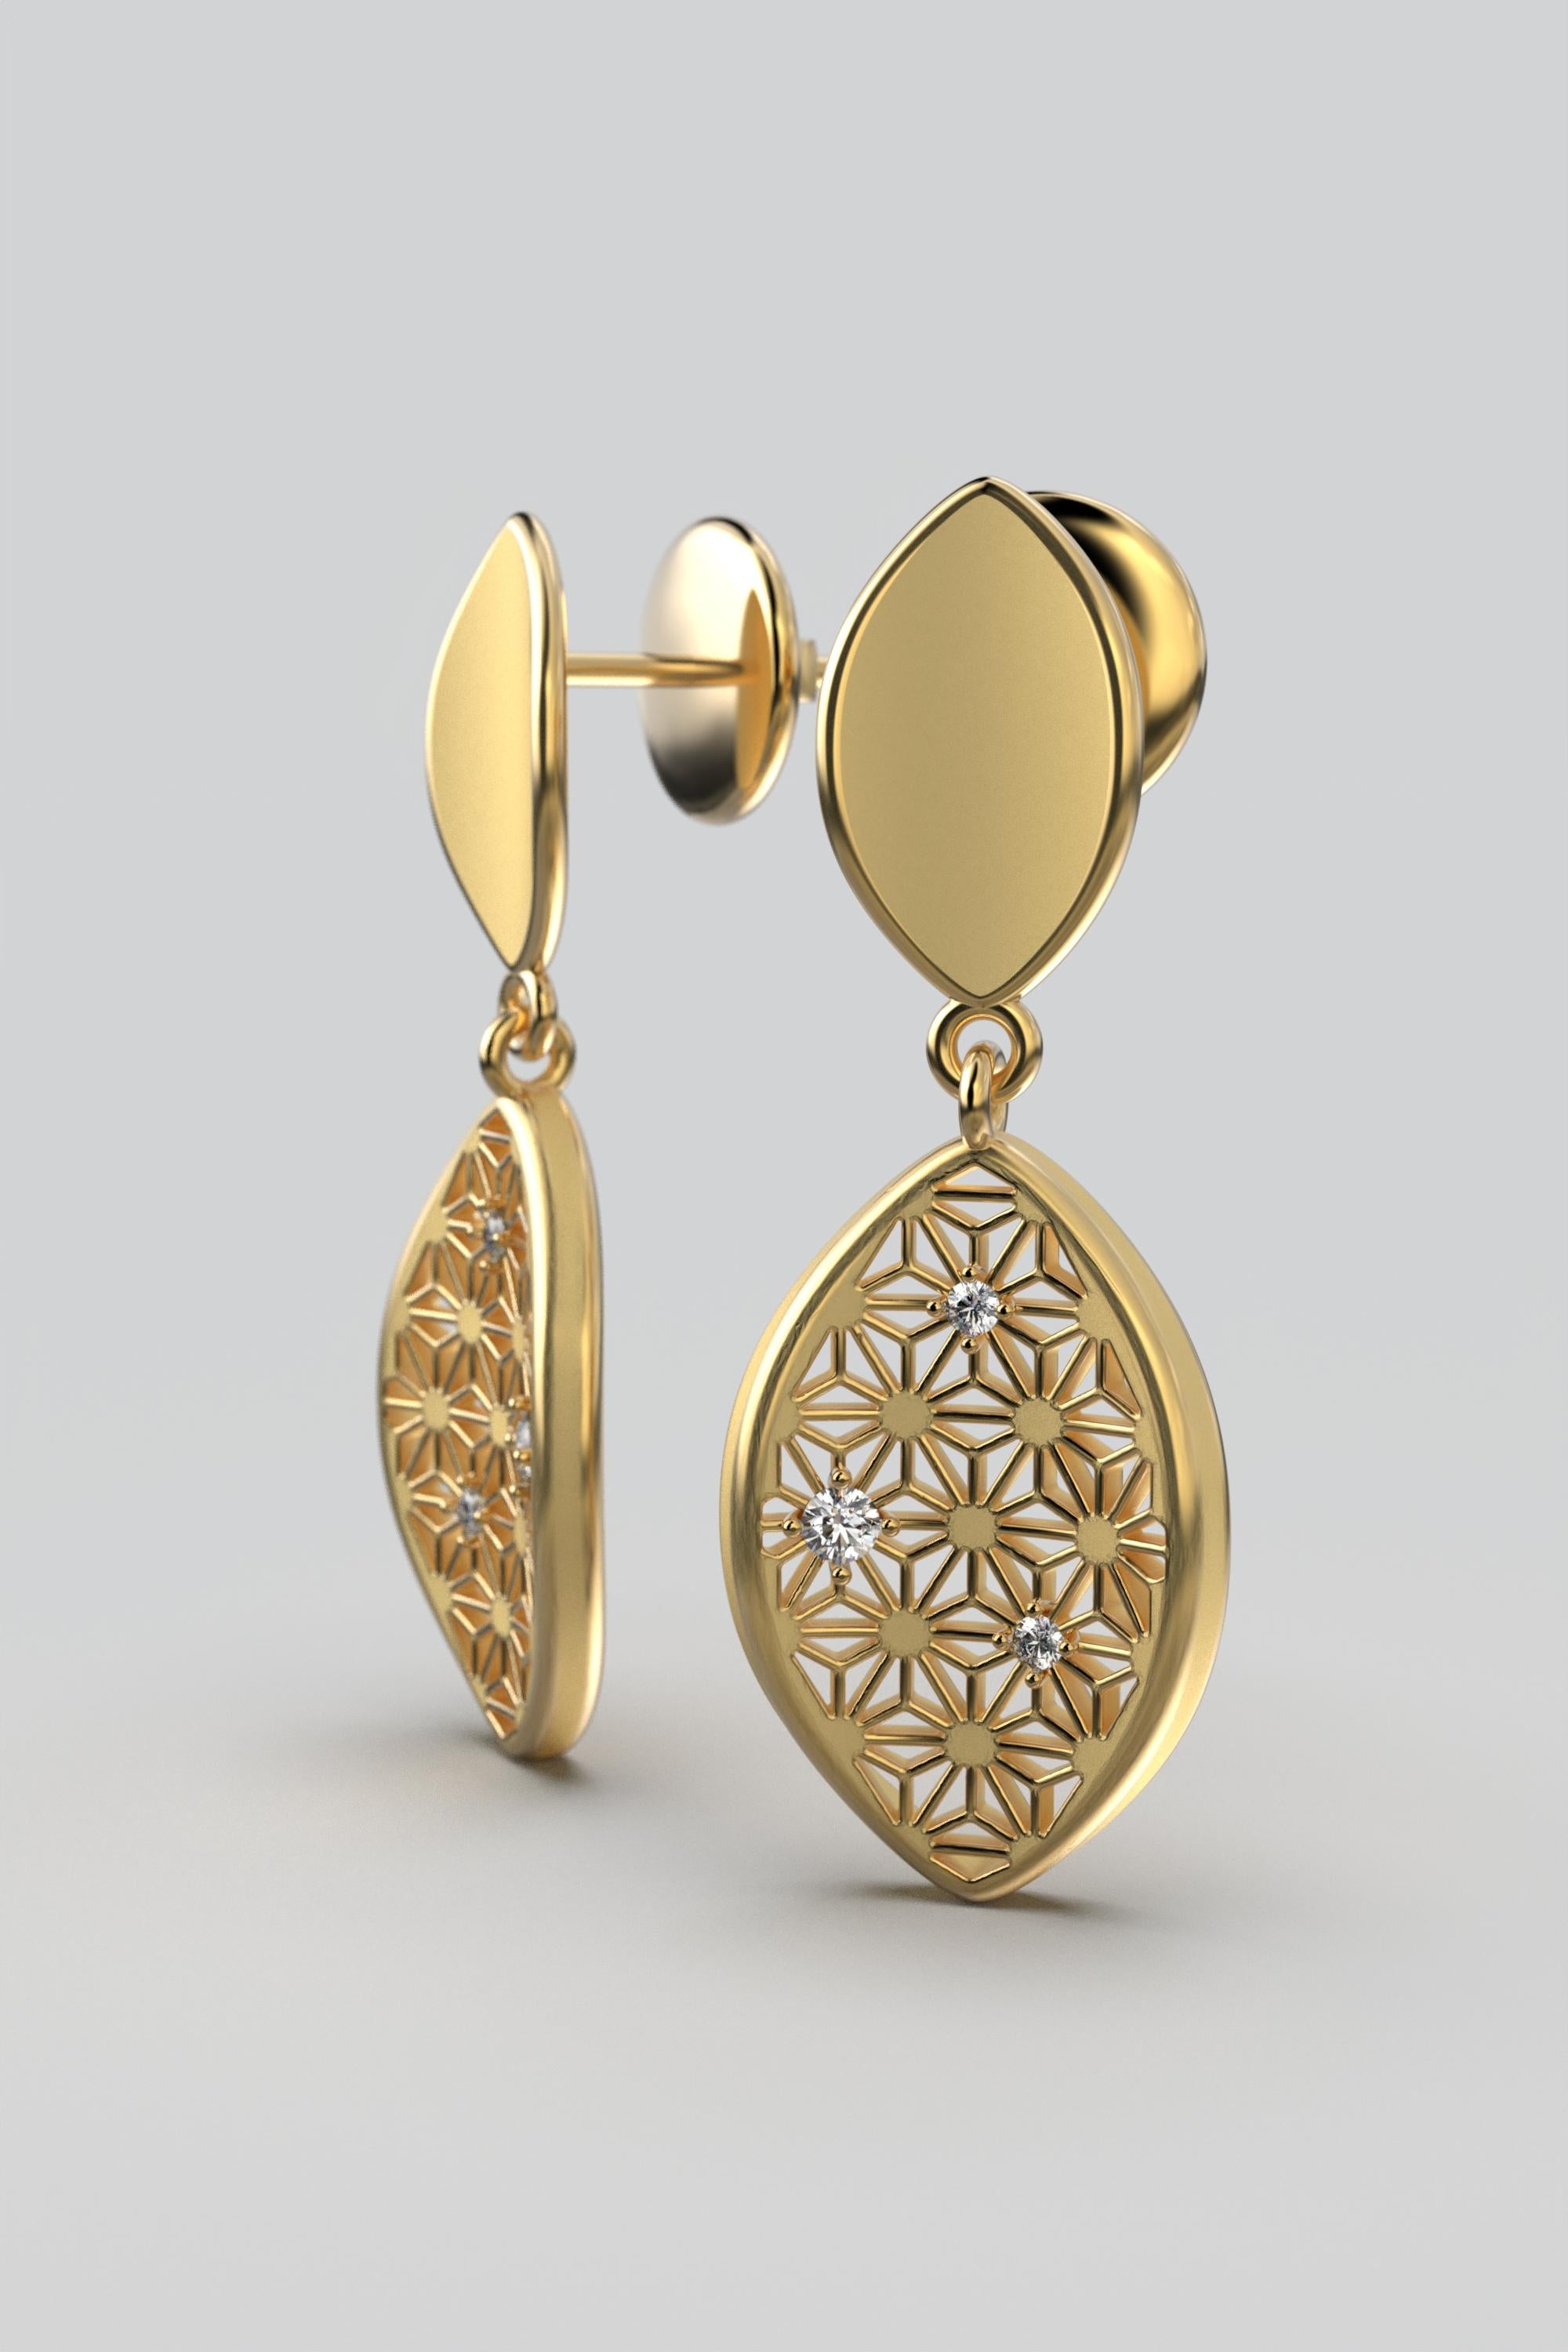 Modern Italian Diamond Earrings in 18k Solid Gold with Japanese Sashiko Pattern For Sale